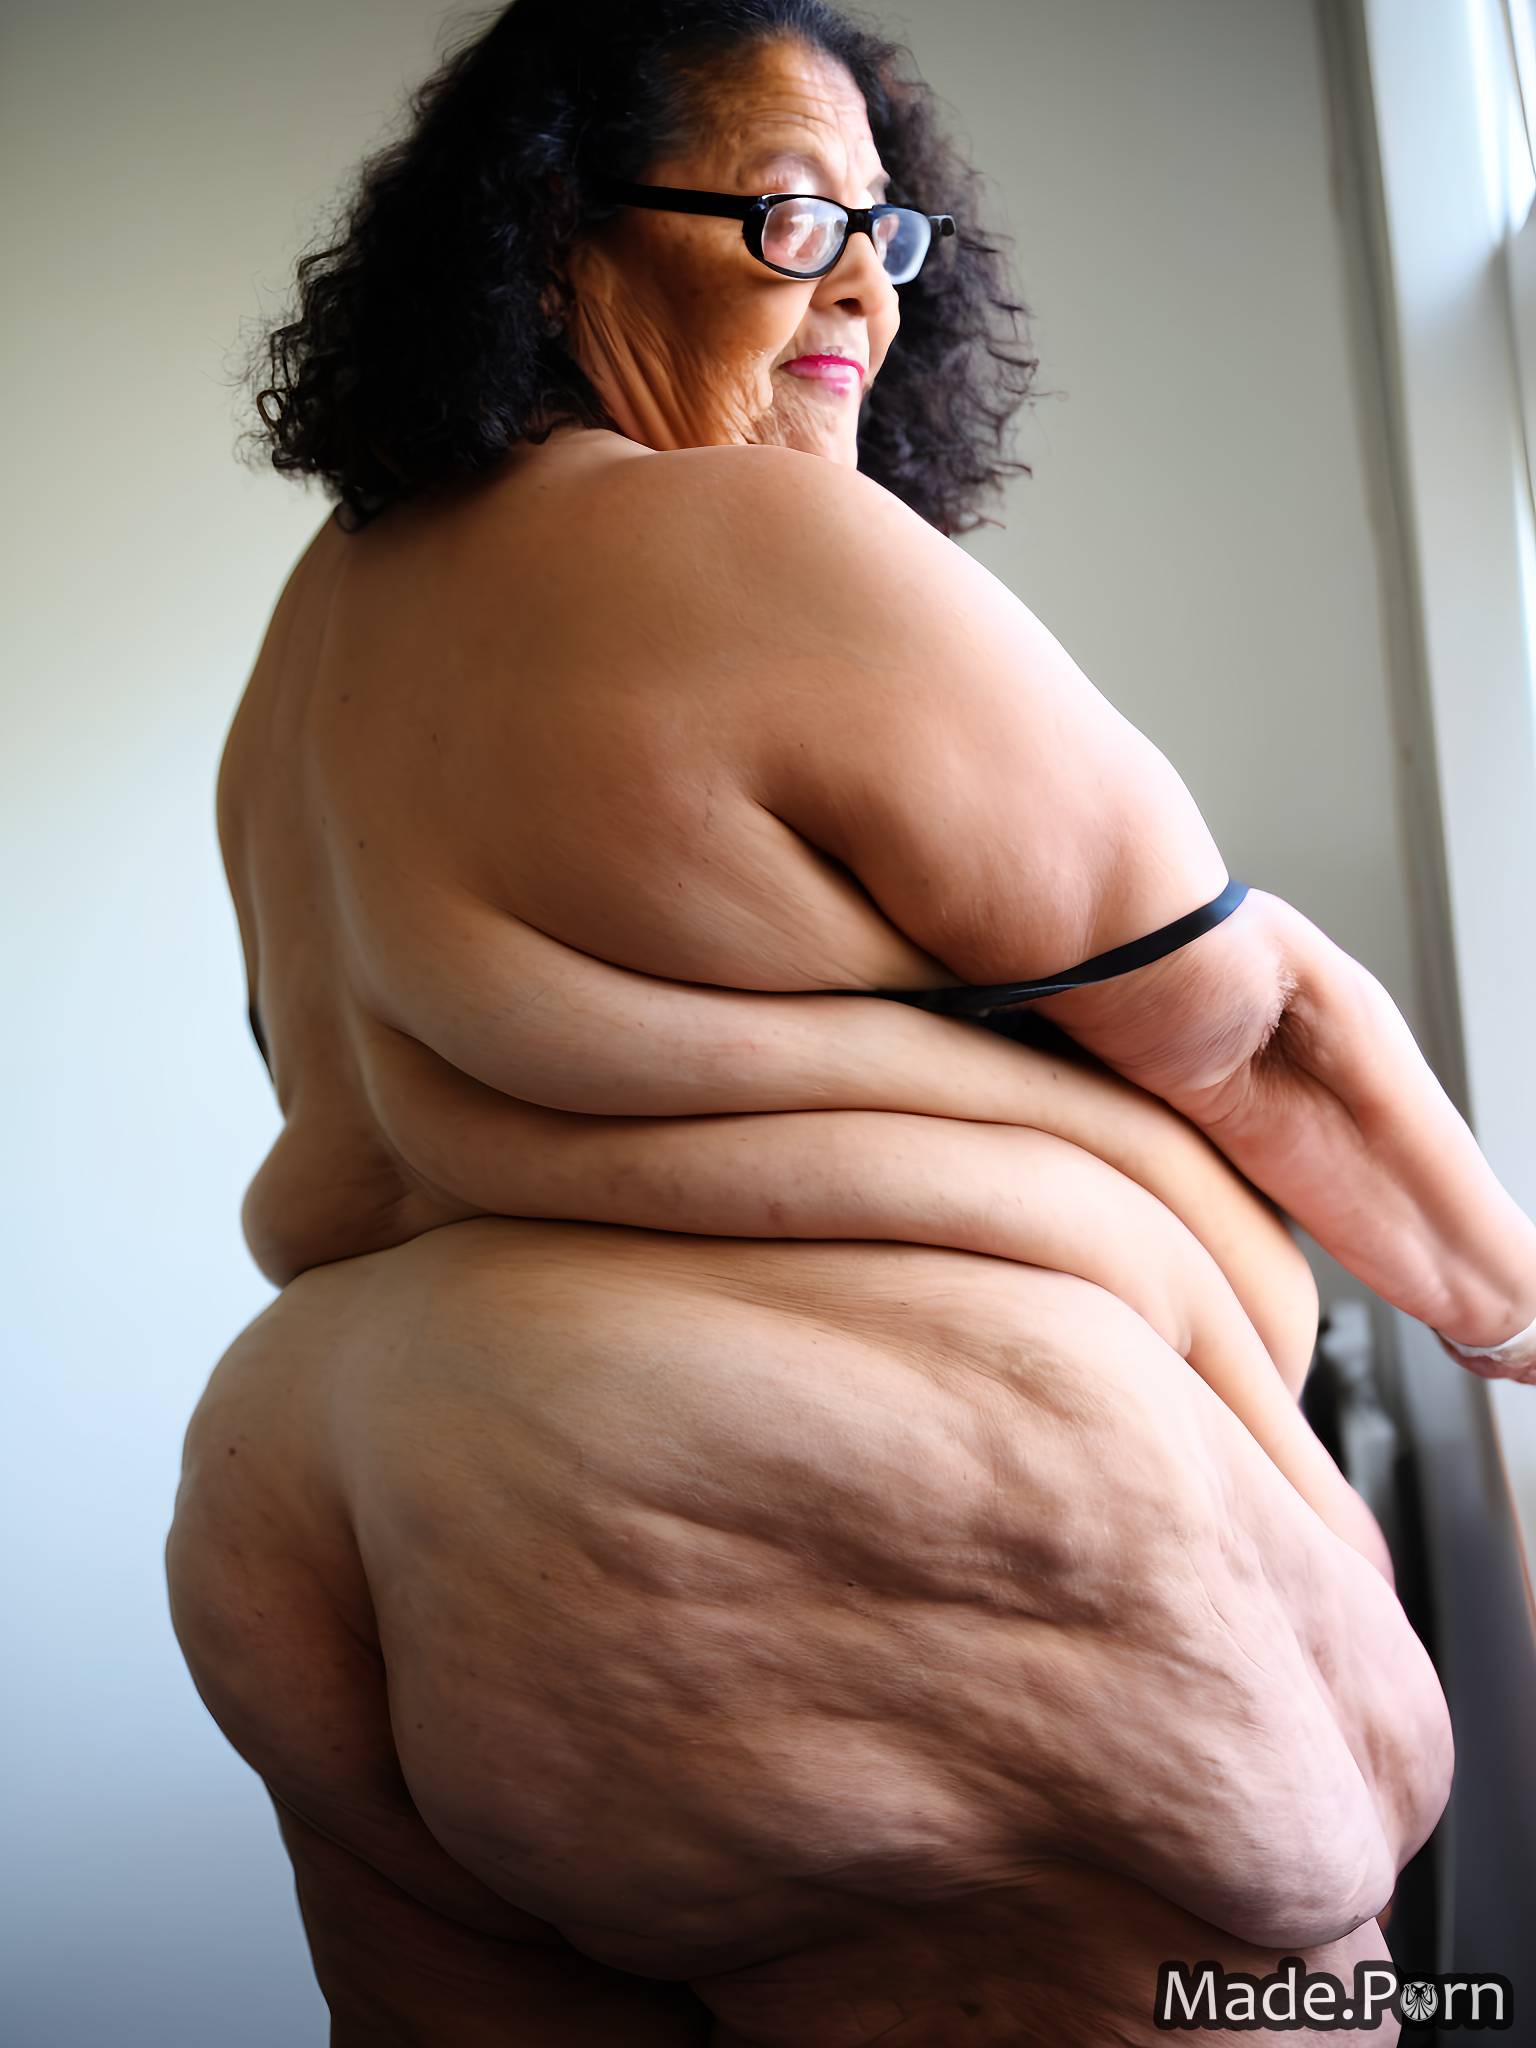 fat short woman black hair photo looking at viewer thighs